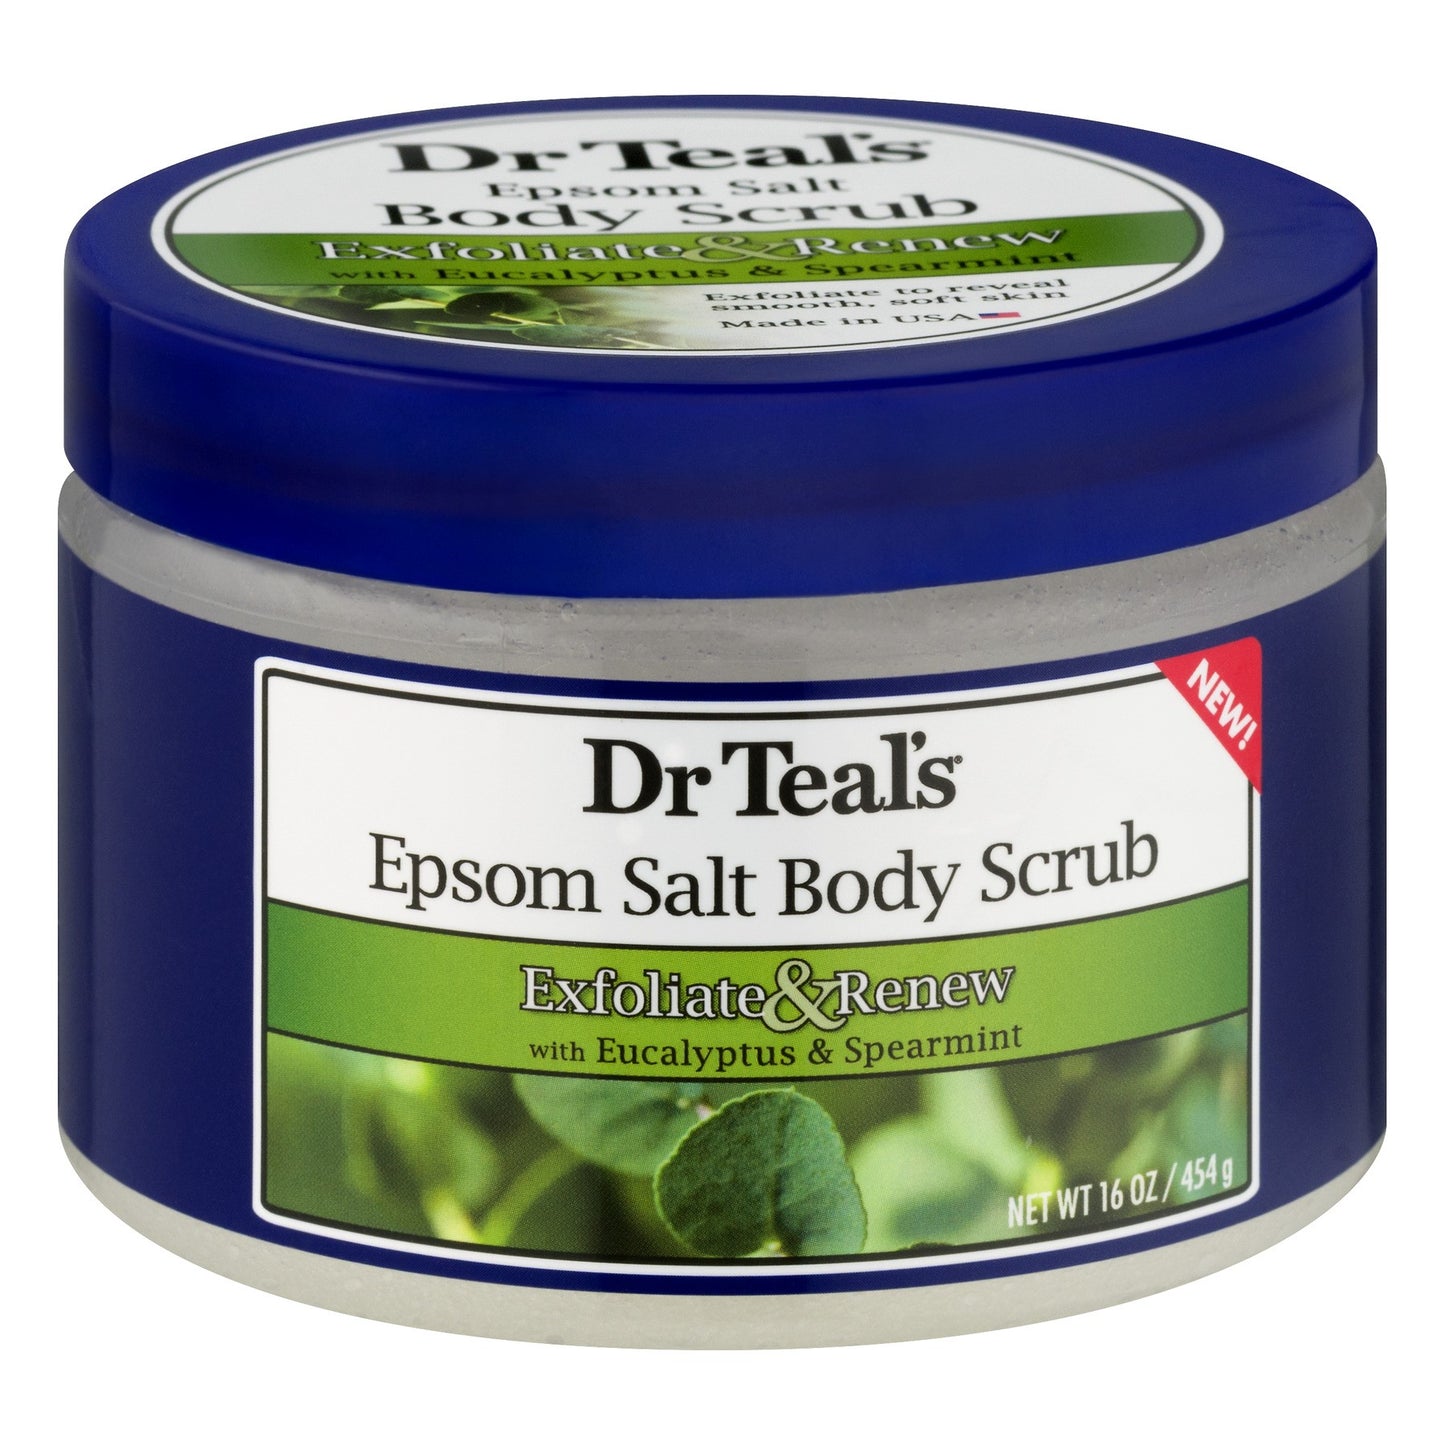 DR TEAL’S EPSOM SALT BODY SCRUB